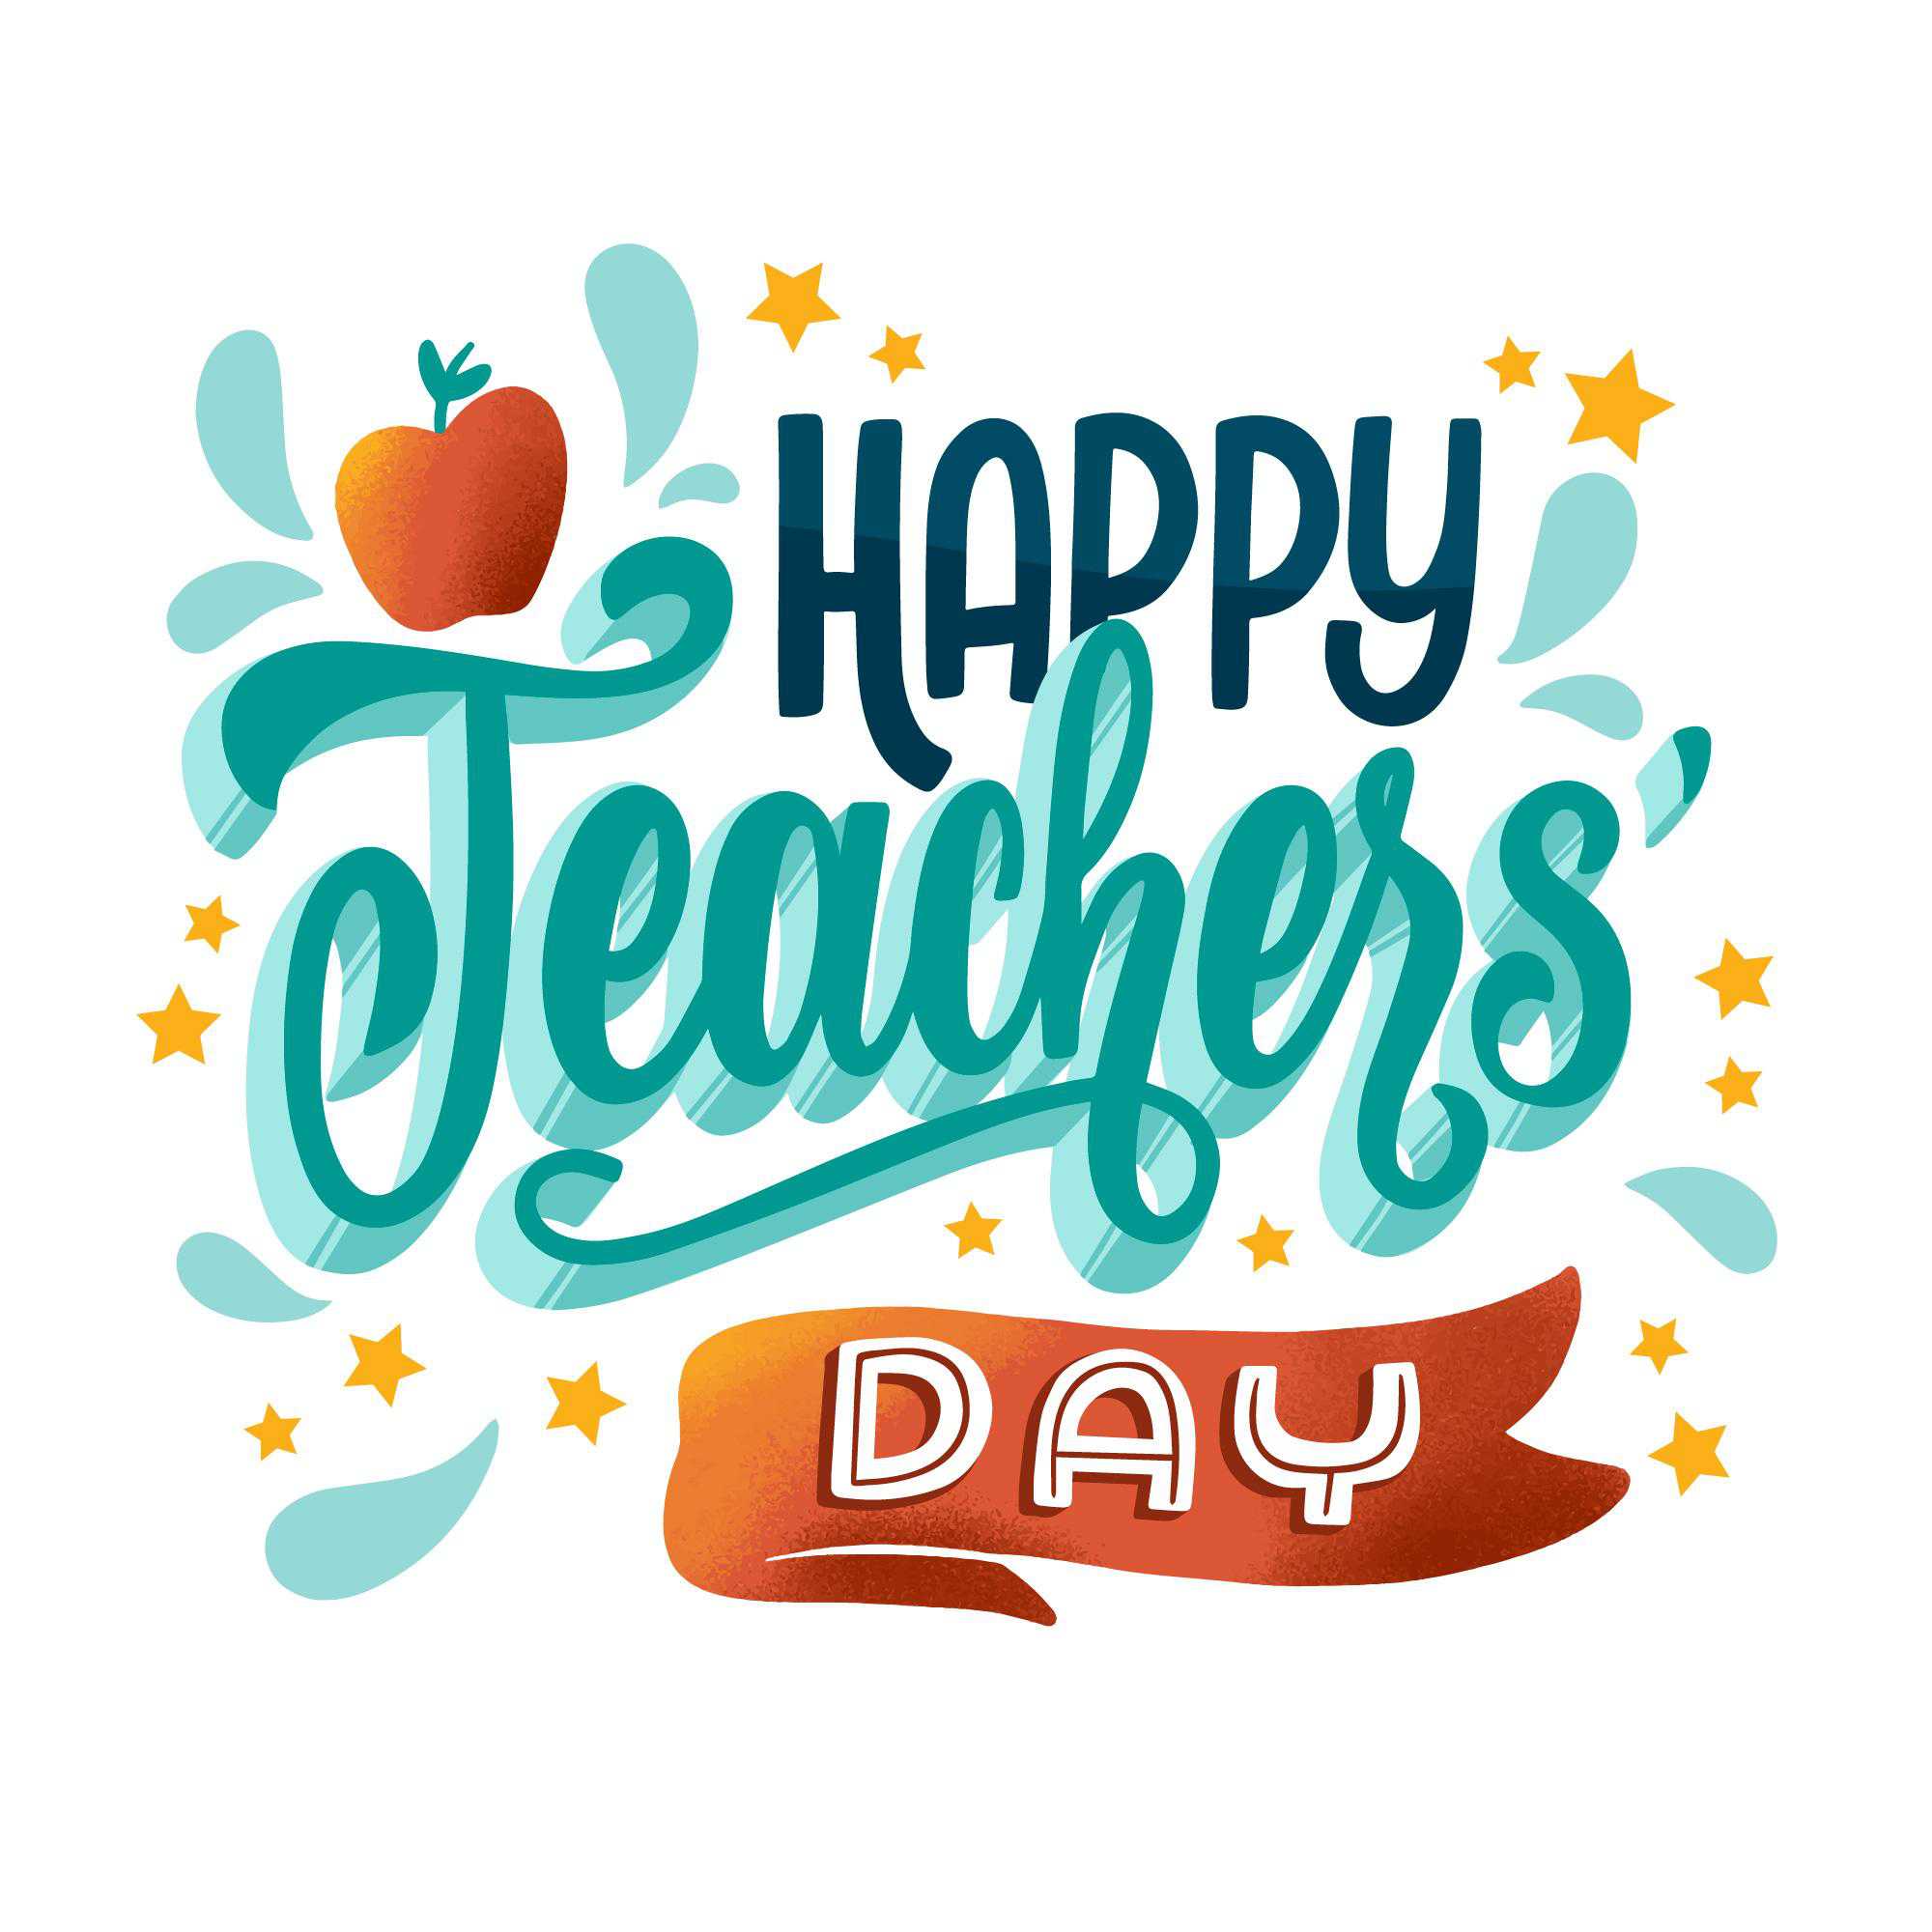 Happy Teacher's Day pictures